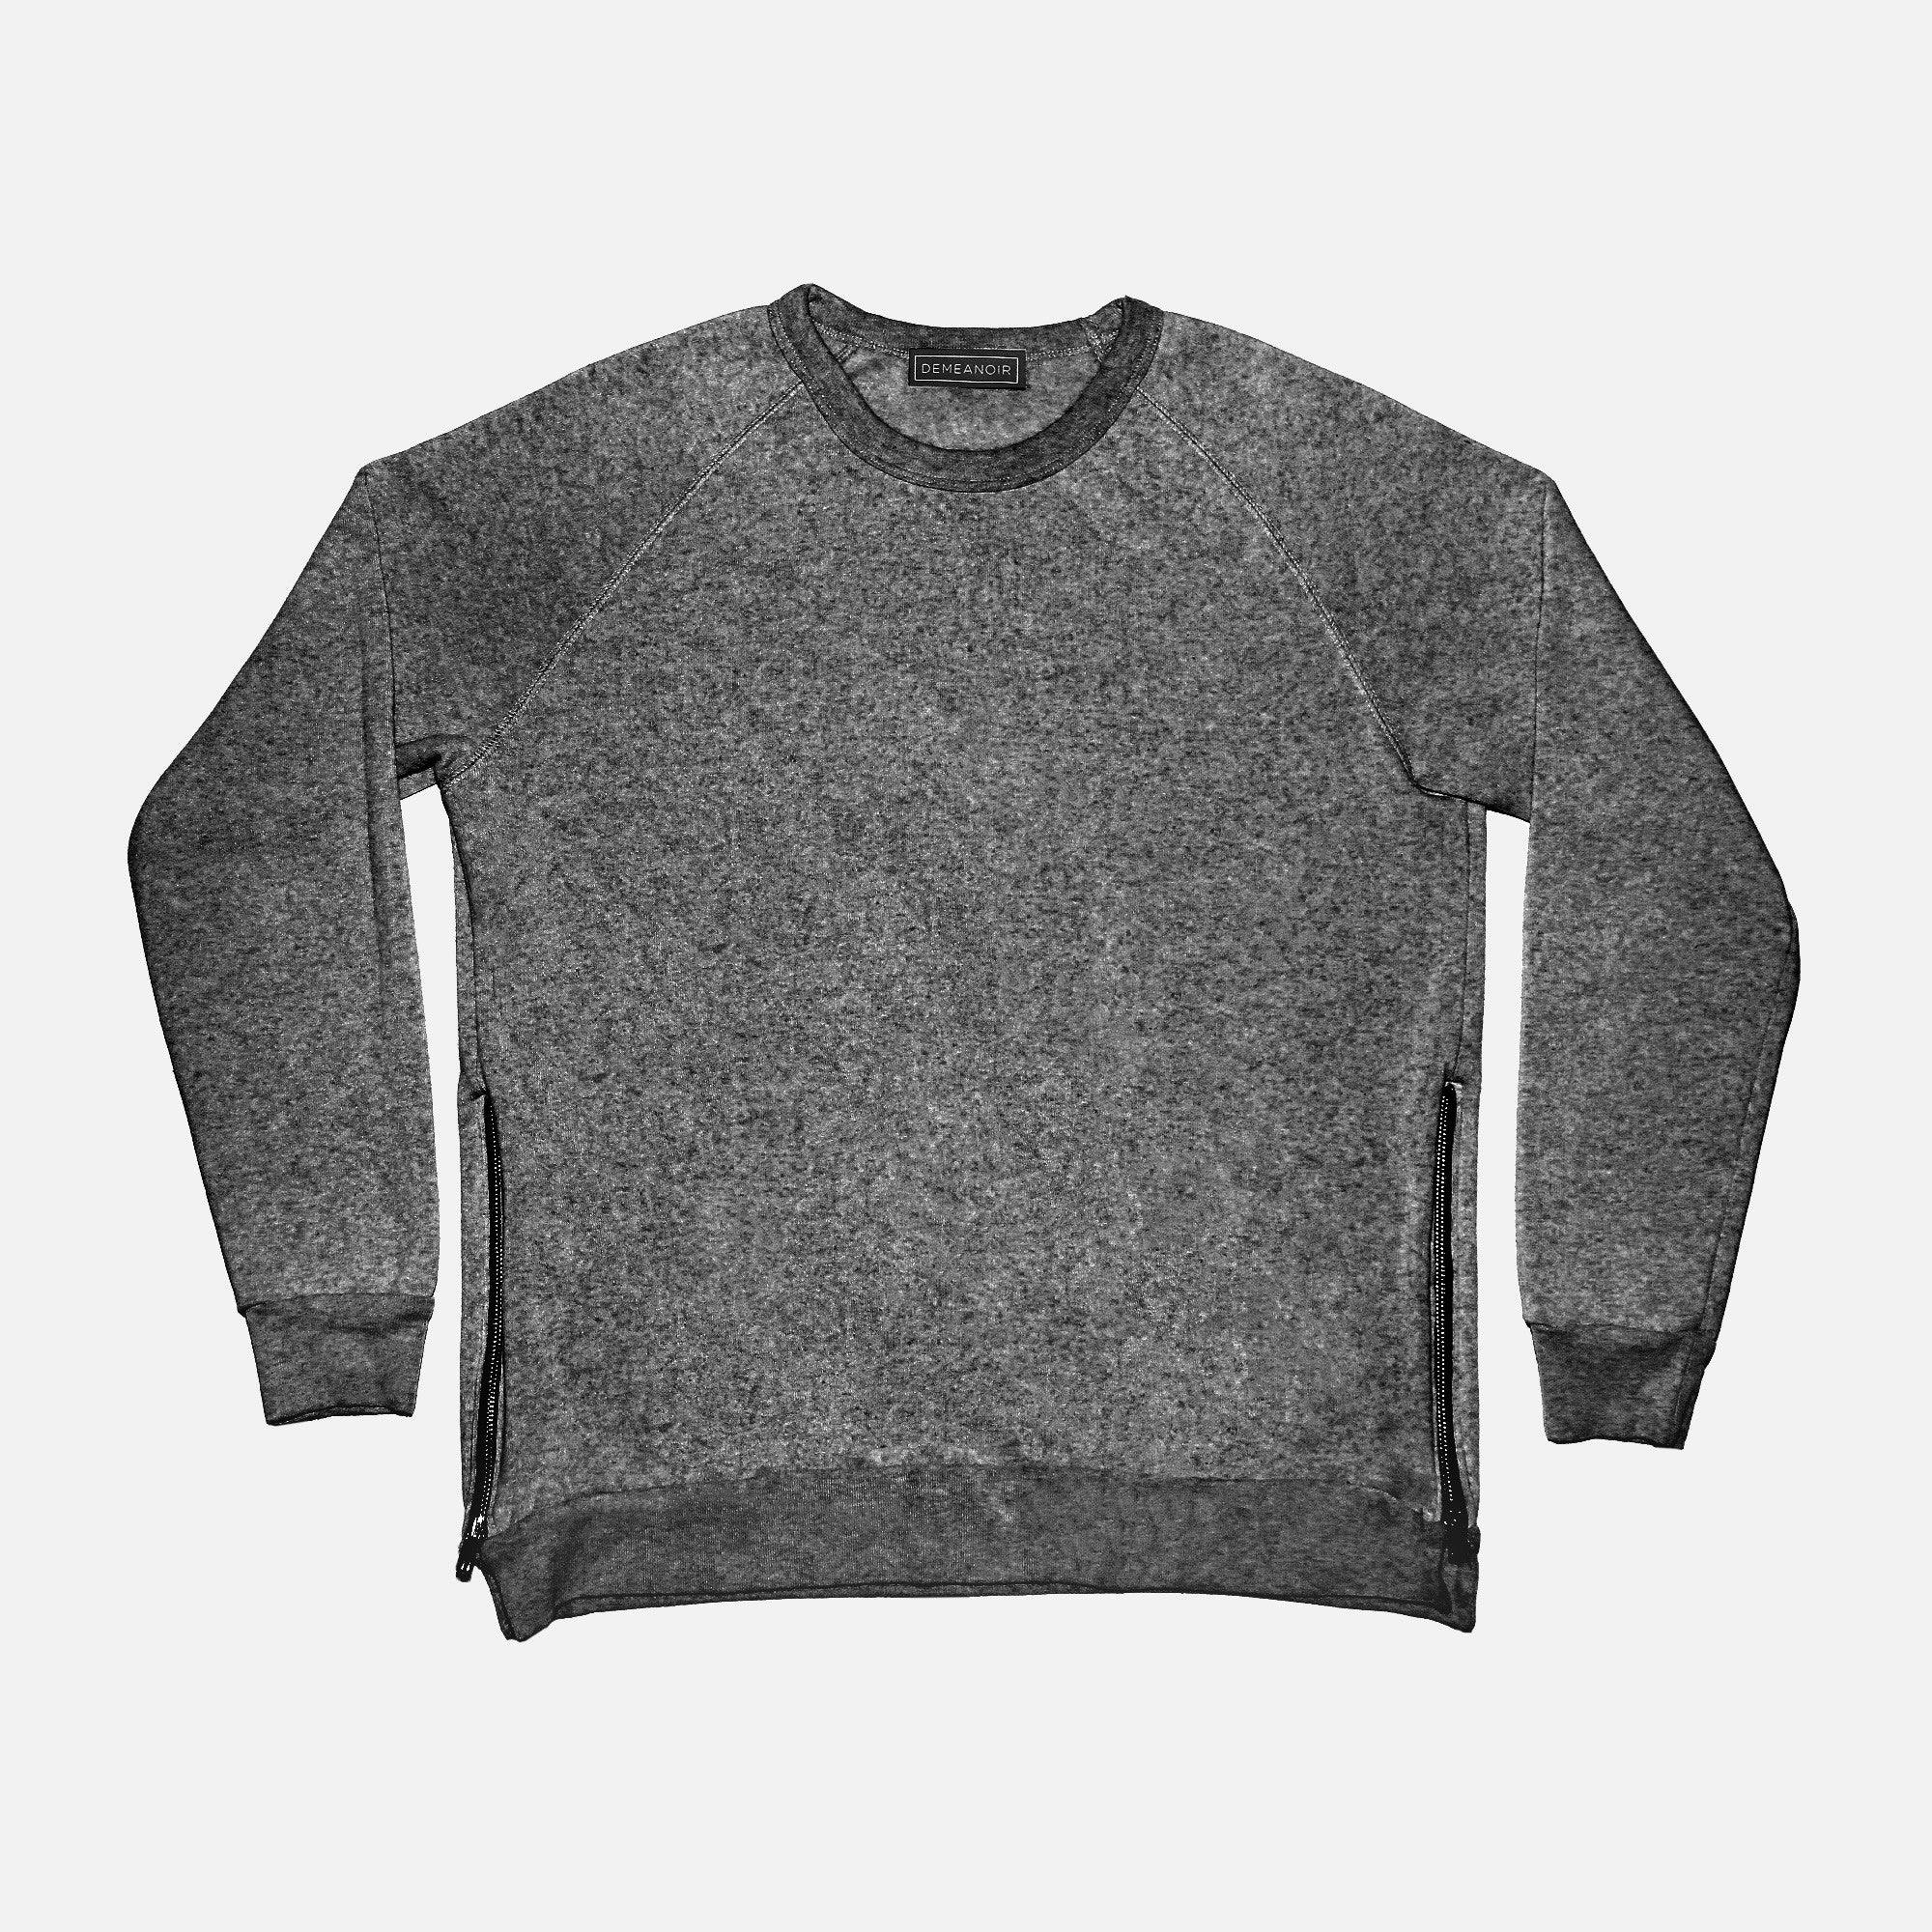 Tri-Blend Sweatshirt Graphite - DEMEANOIR - 1